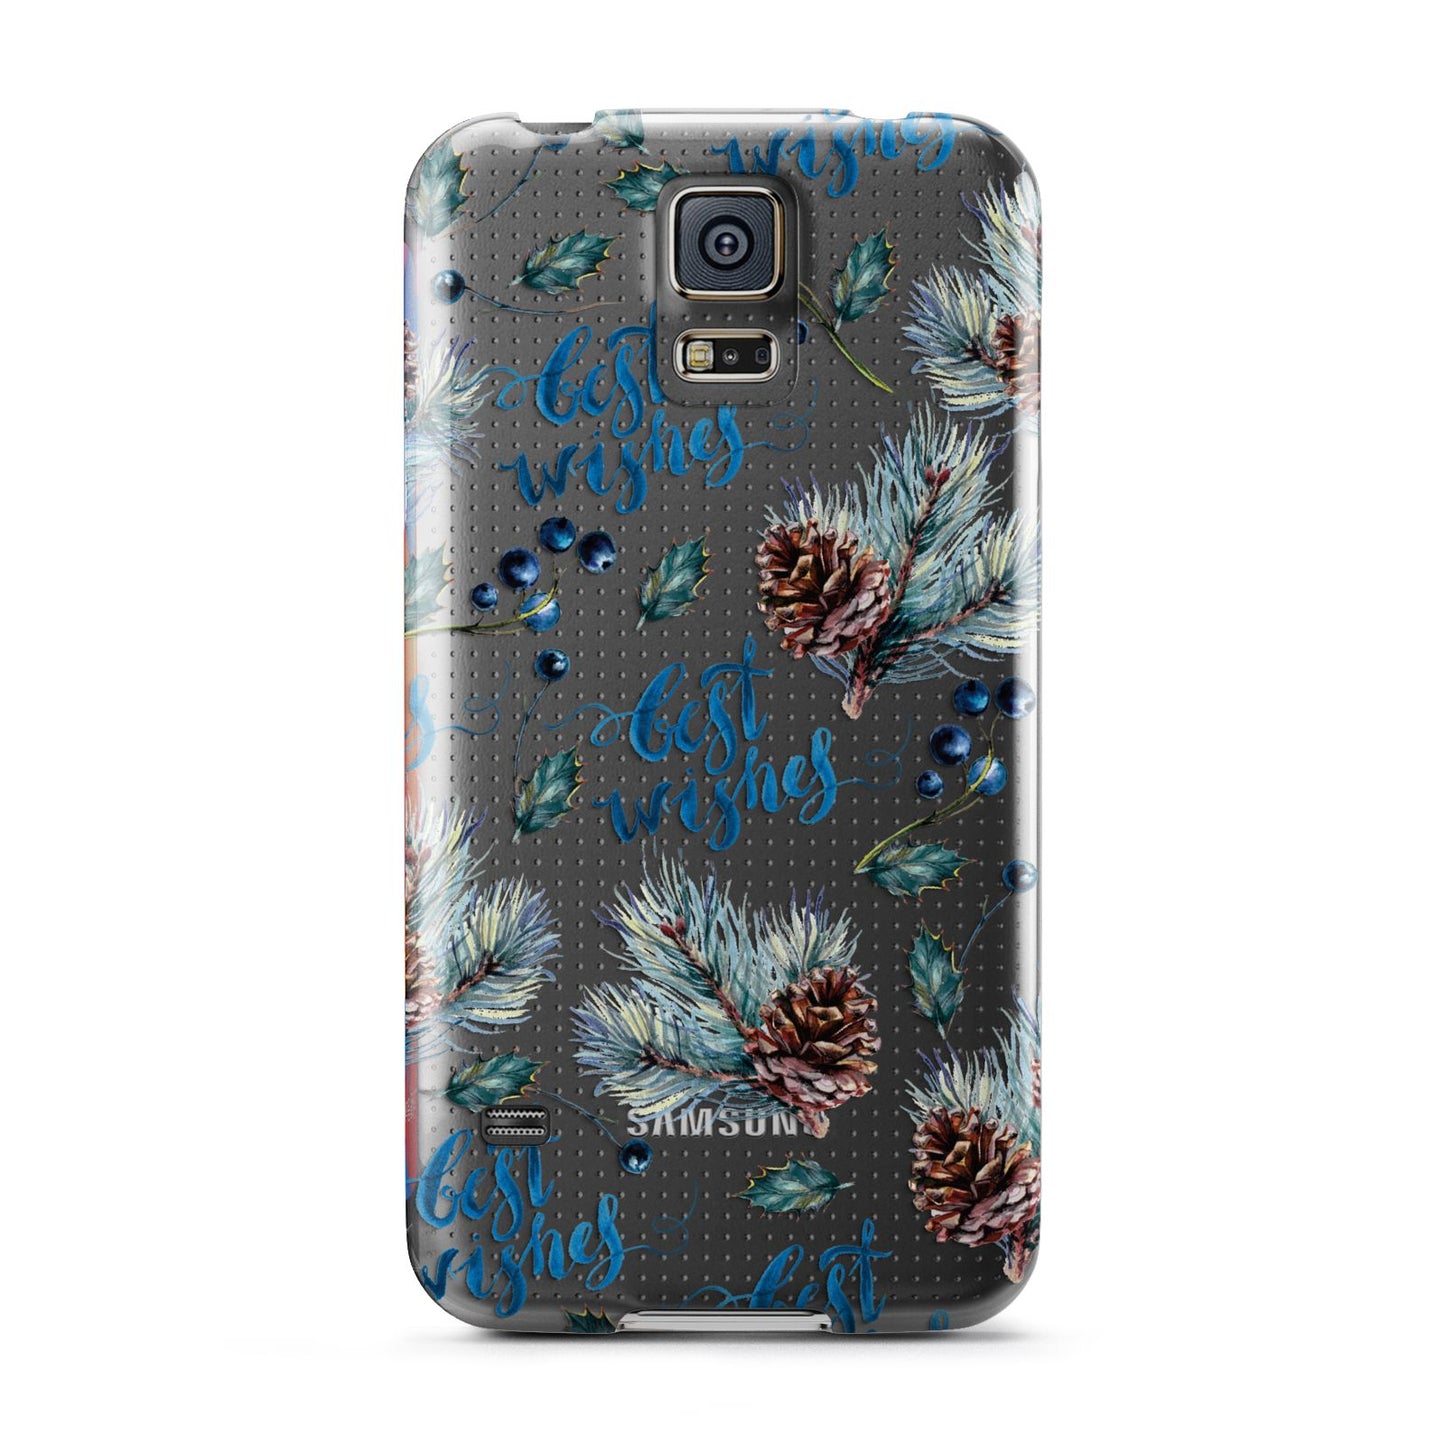 Pine cones wild berries Samsung Galaxy S5 Case